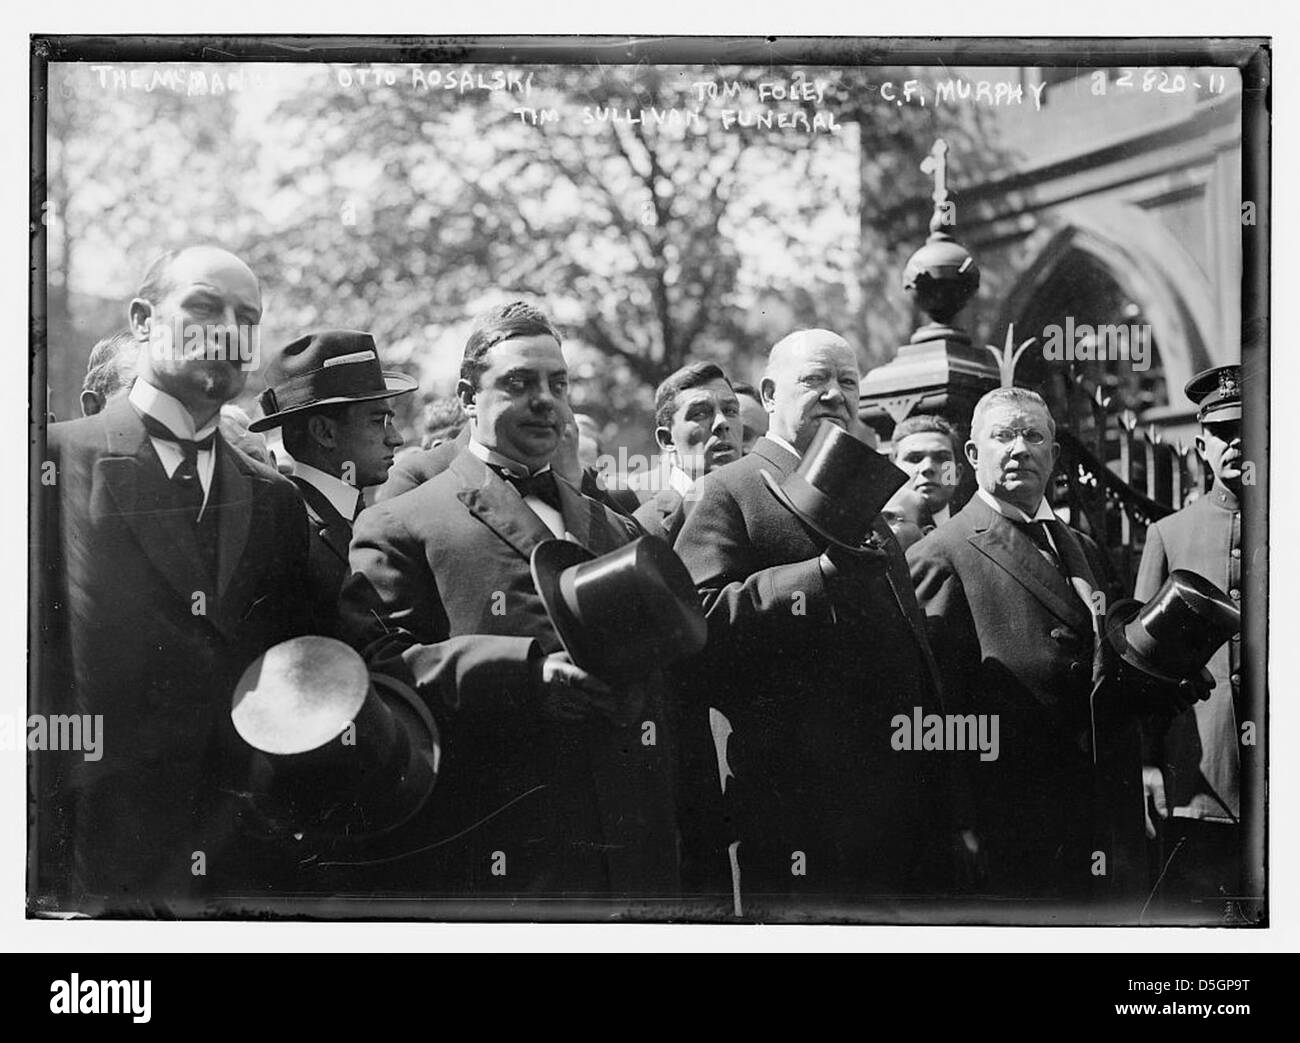 The McManus, Otto Rosalsky, Tom Foley, C.F. Murphy, Tim Sullivan funeral (LOC) Stock Photo